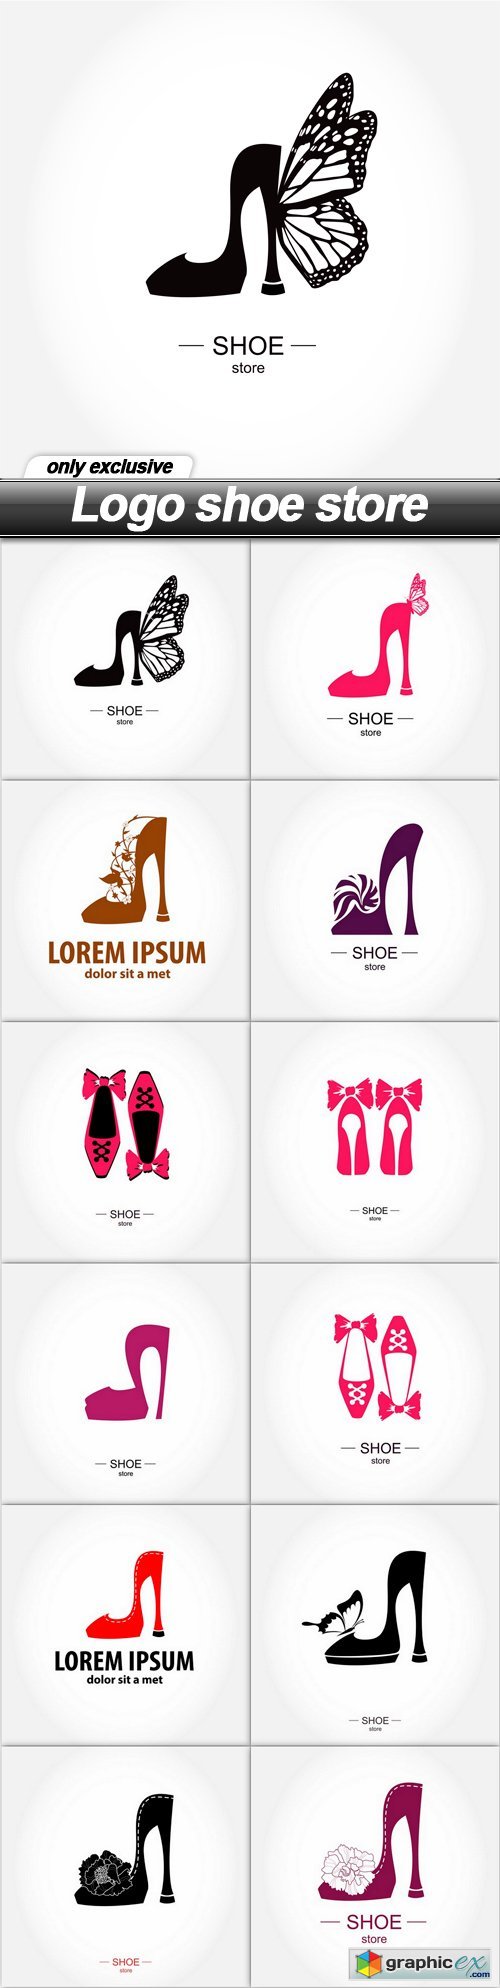 Logo shoe store - 12 EPS